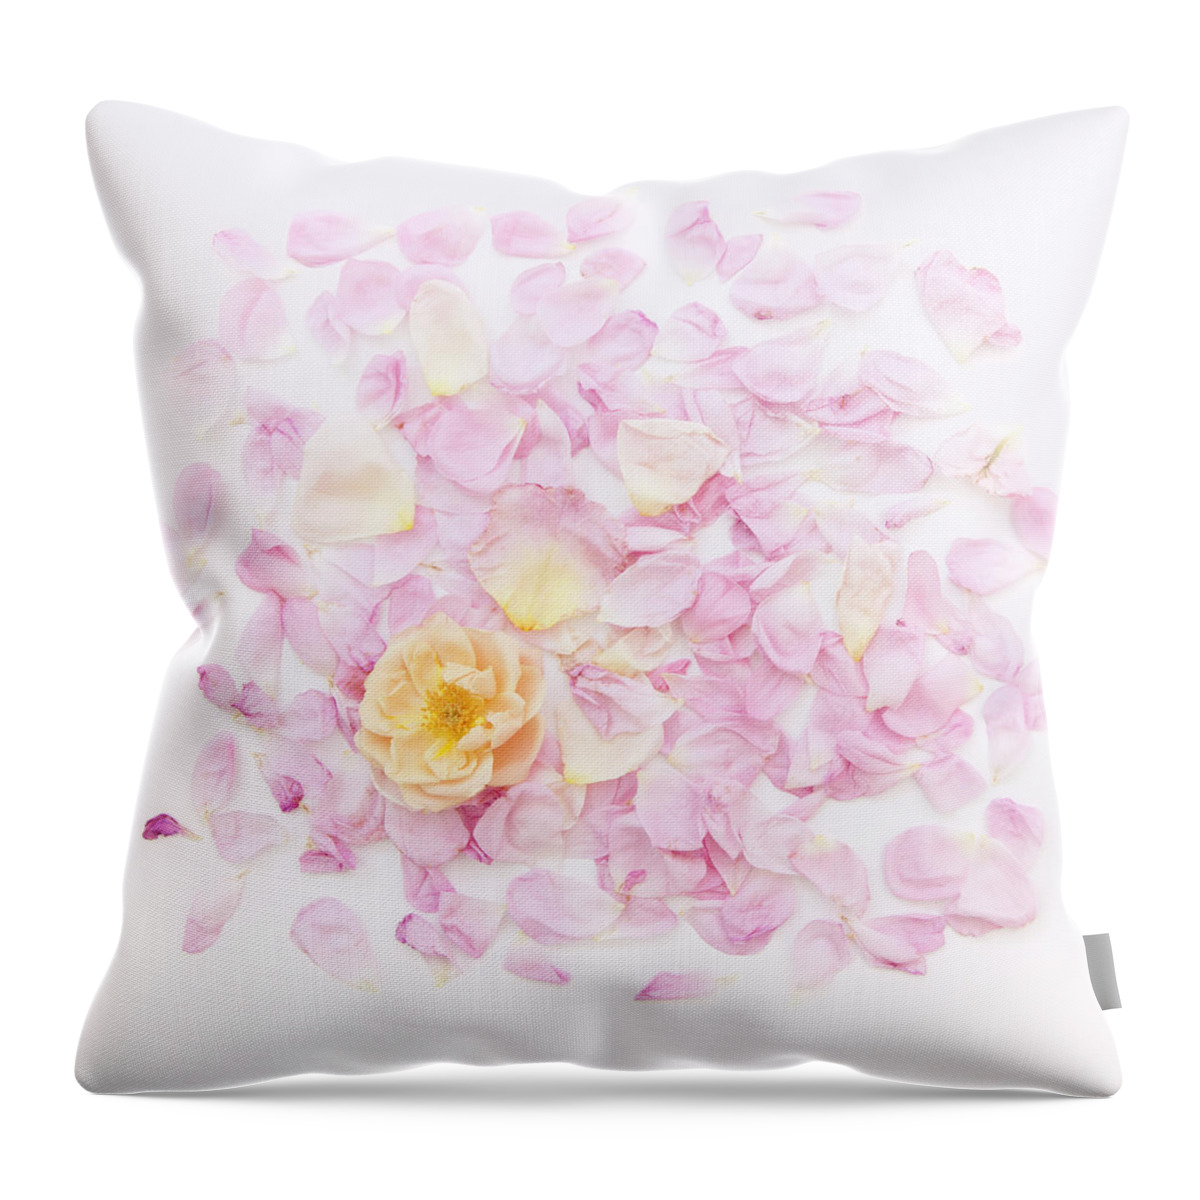 Rose Petal Pillow Throw Pillow featuring the photograph Ah My Love, Ah My Own by Theresa Tahara